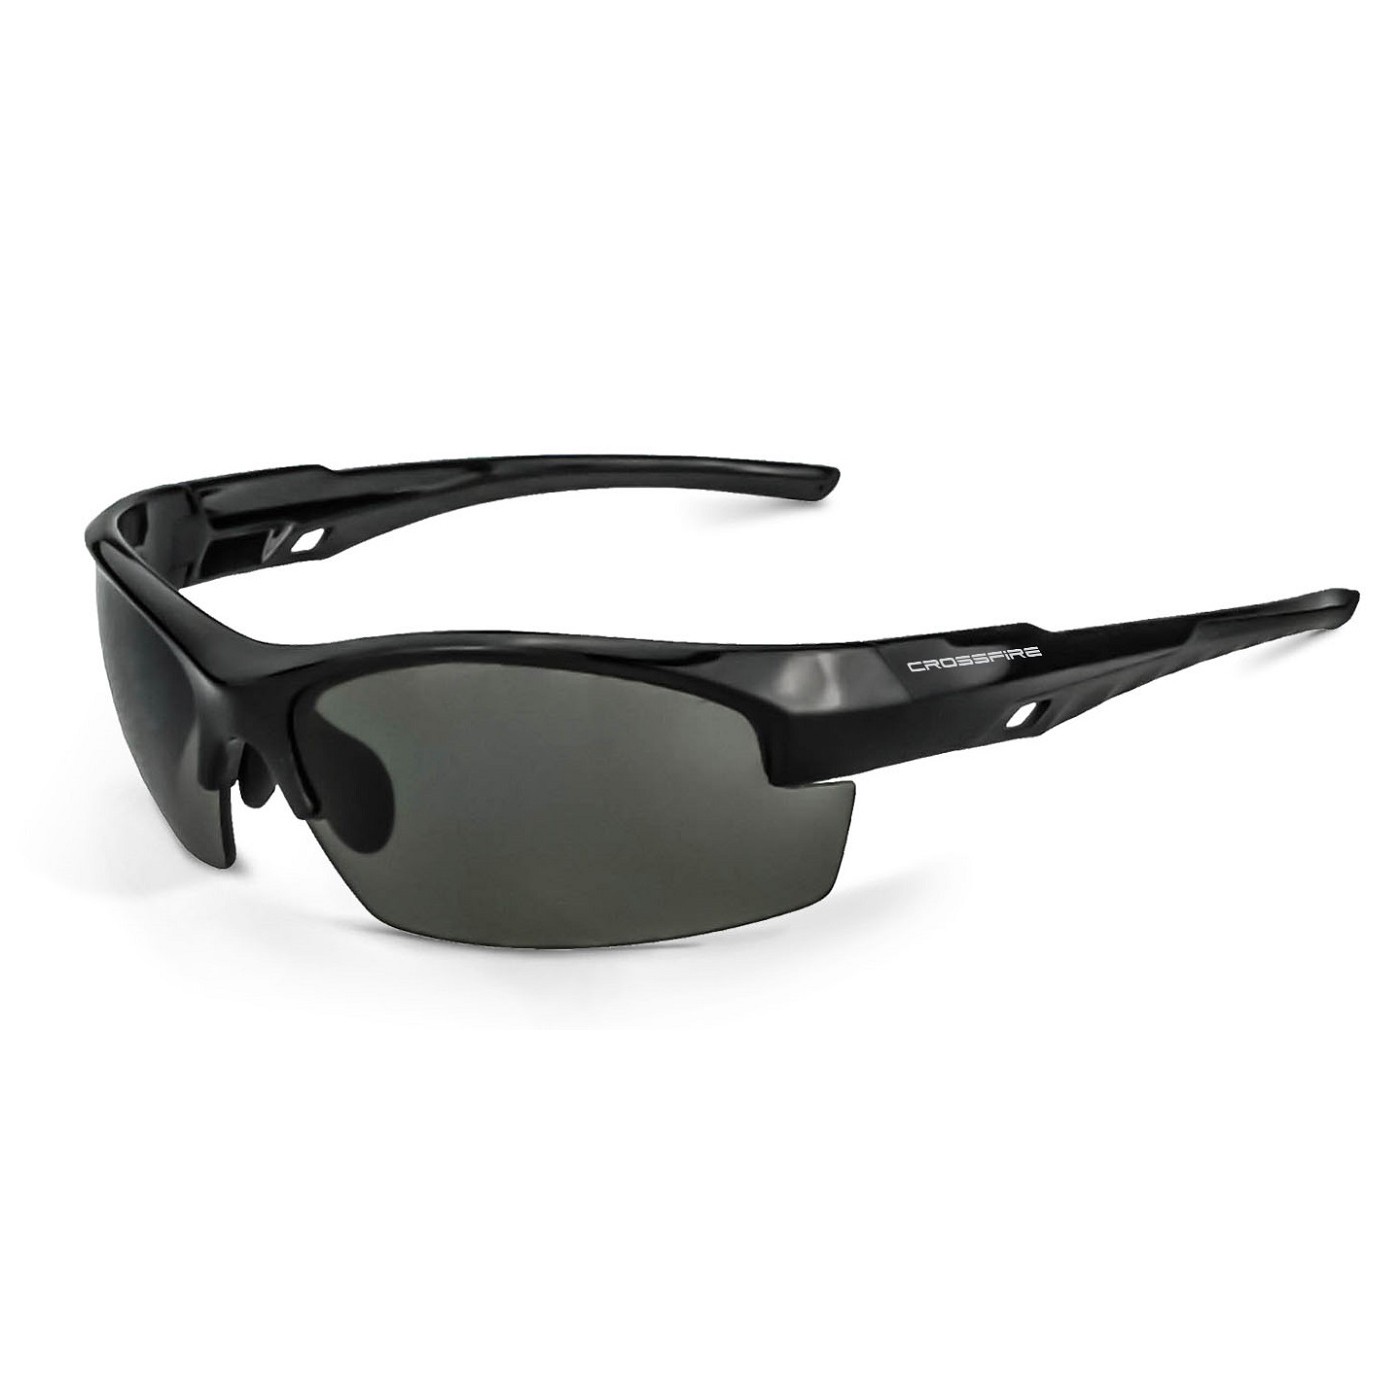 Crossfire ES4 Crystal Black Half-Frame Smoke Lens Safety Sunglasses 2141 -  Box of 12